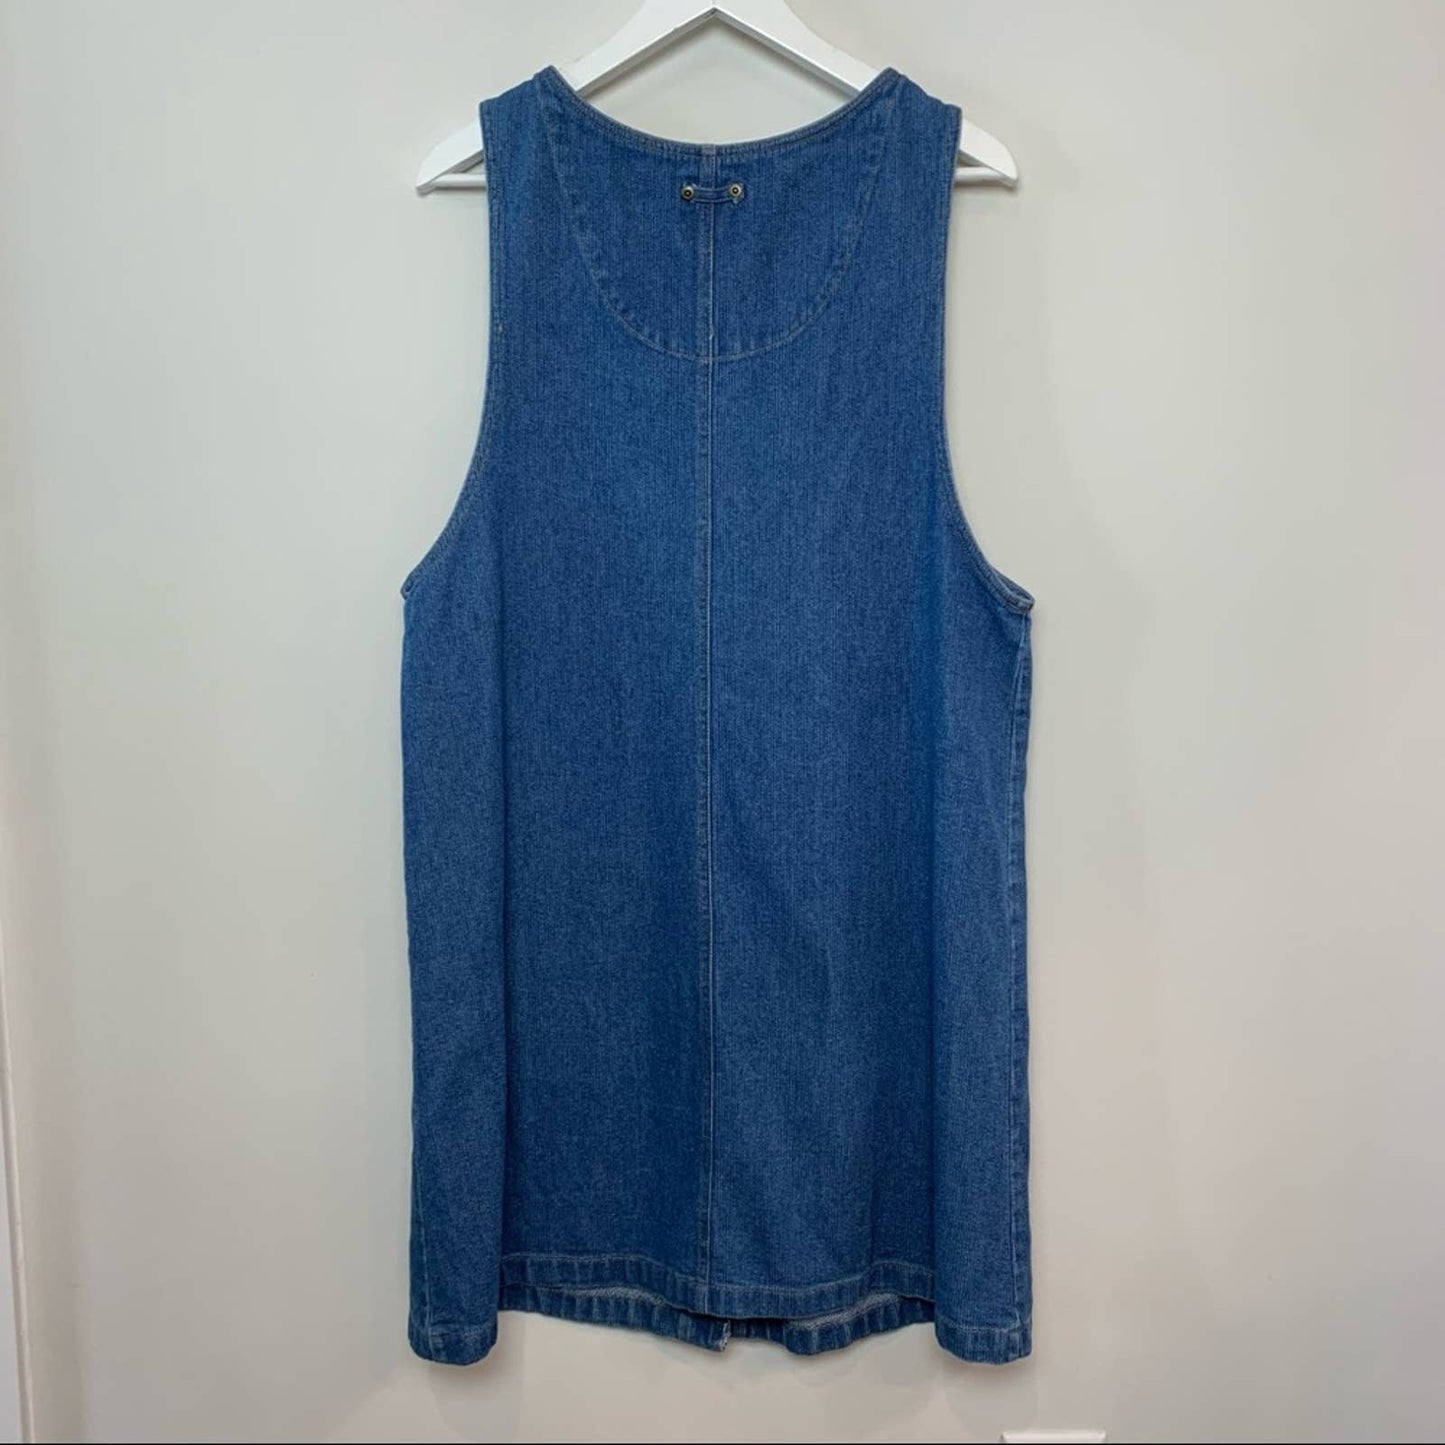 Vintage 90s Blue J. Denim Jean Jumper Dress Large Sleeveless Cotton